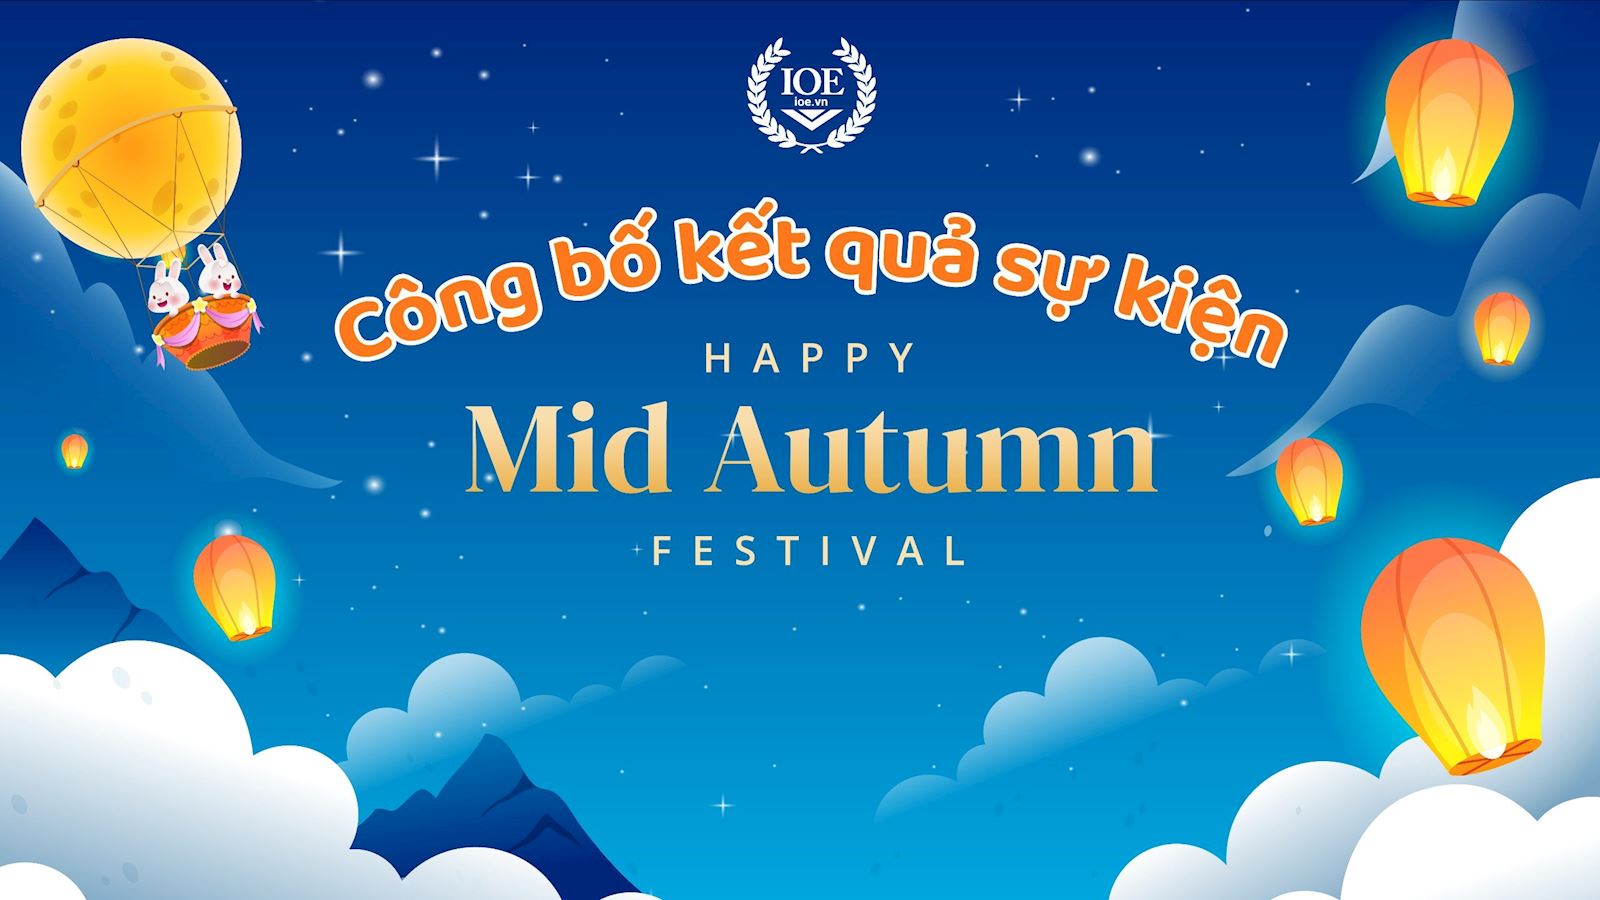 Công bố kết quả sự kiện "Happy Mid-Autumn Festival"